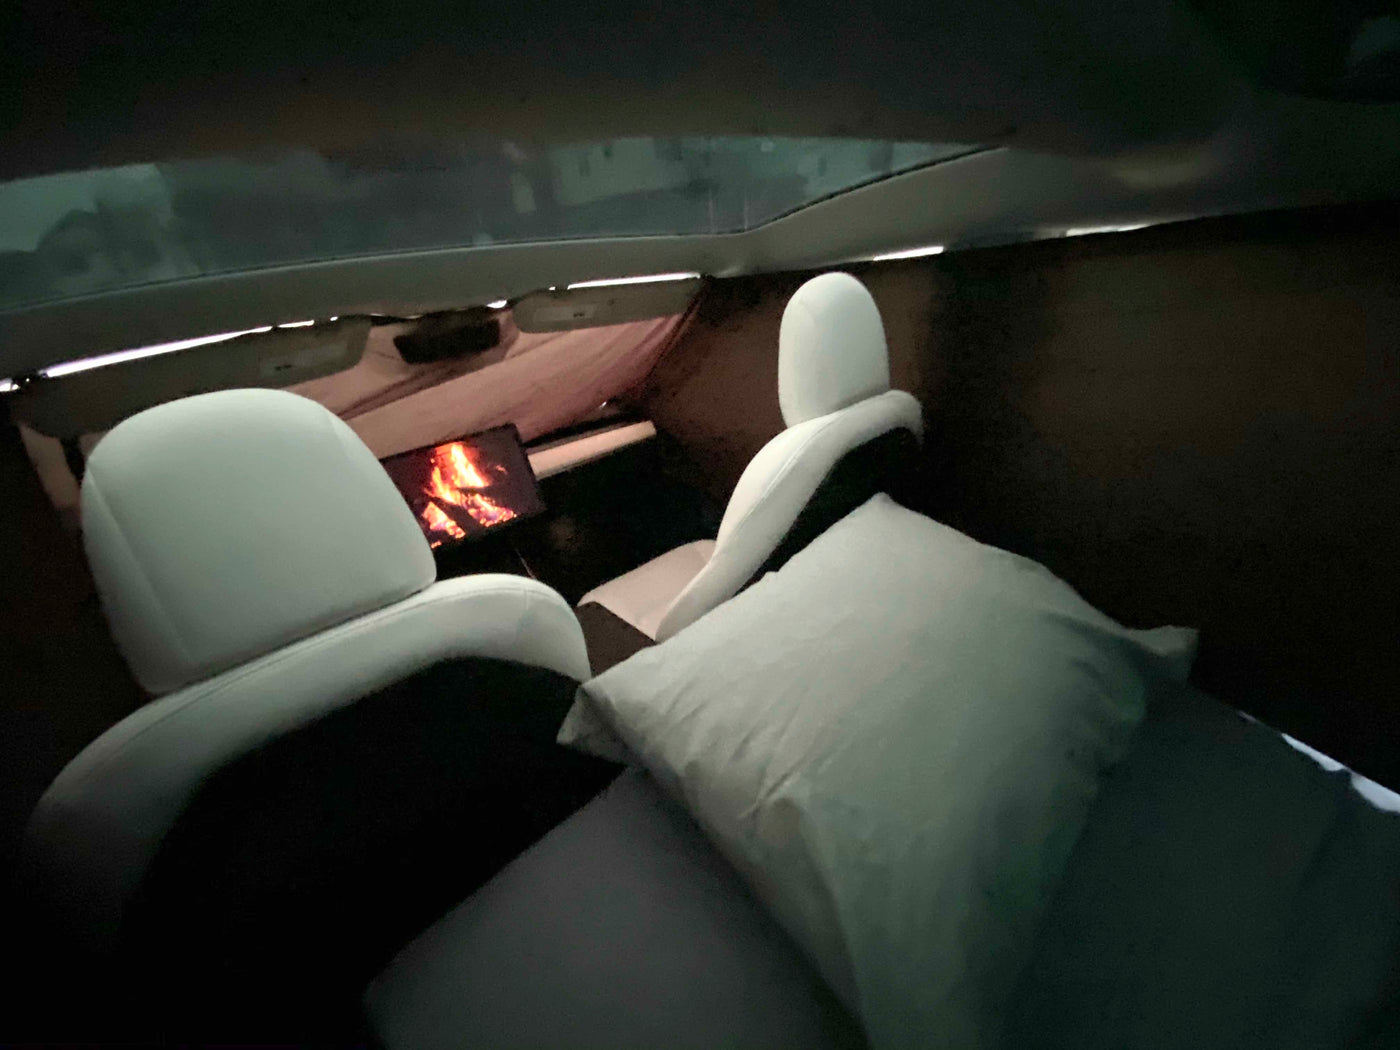 Matelas de camping - Tesla model 3 - Équipement caravaning